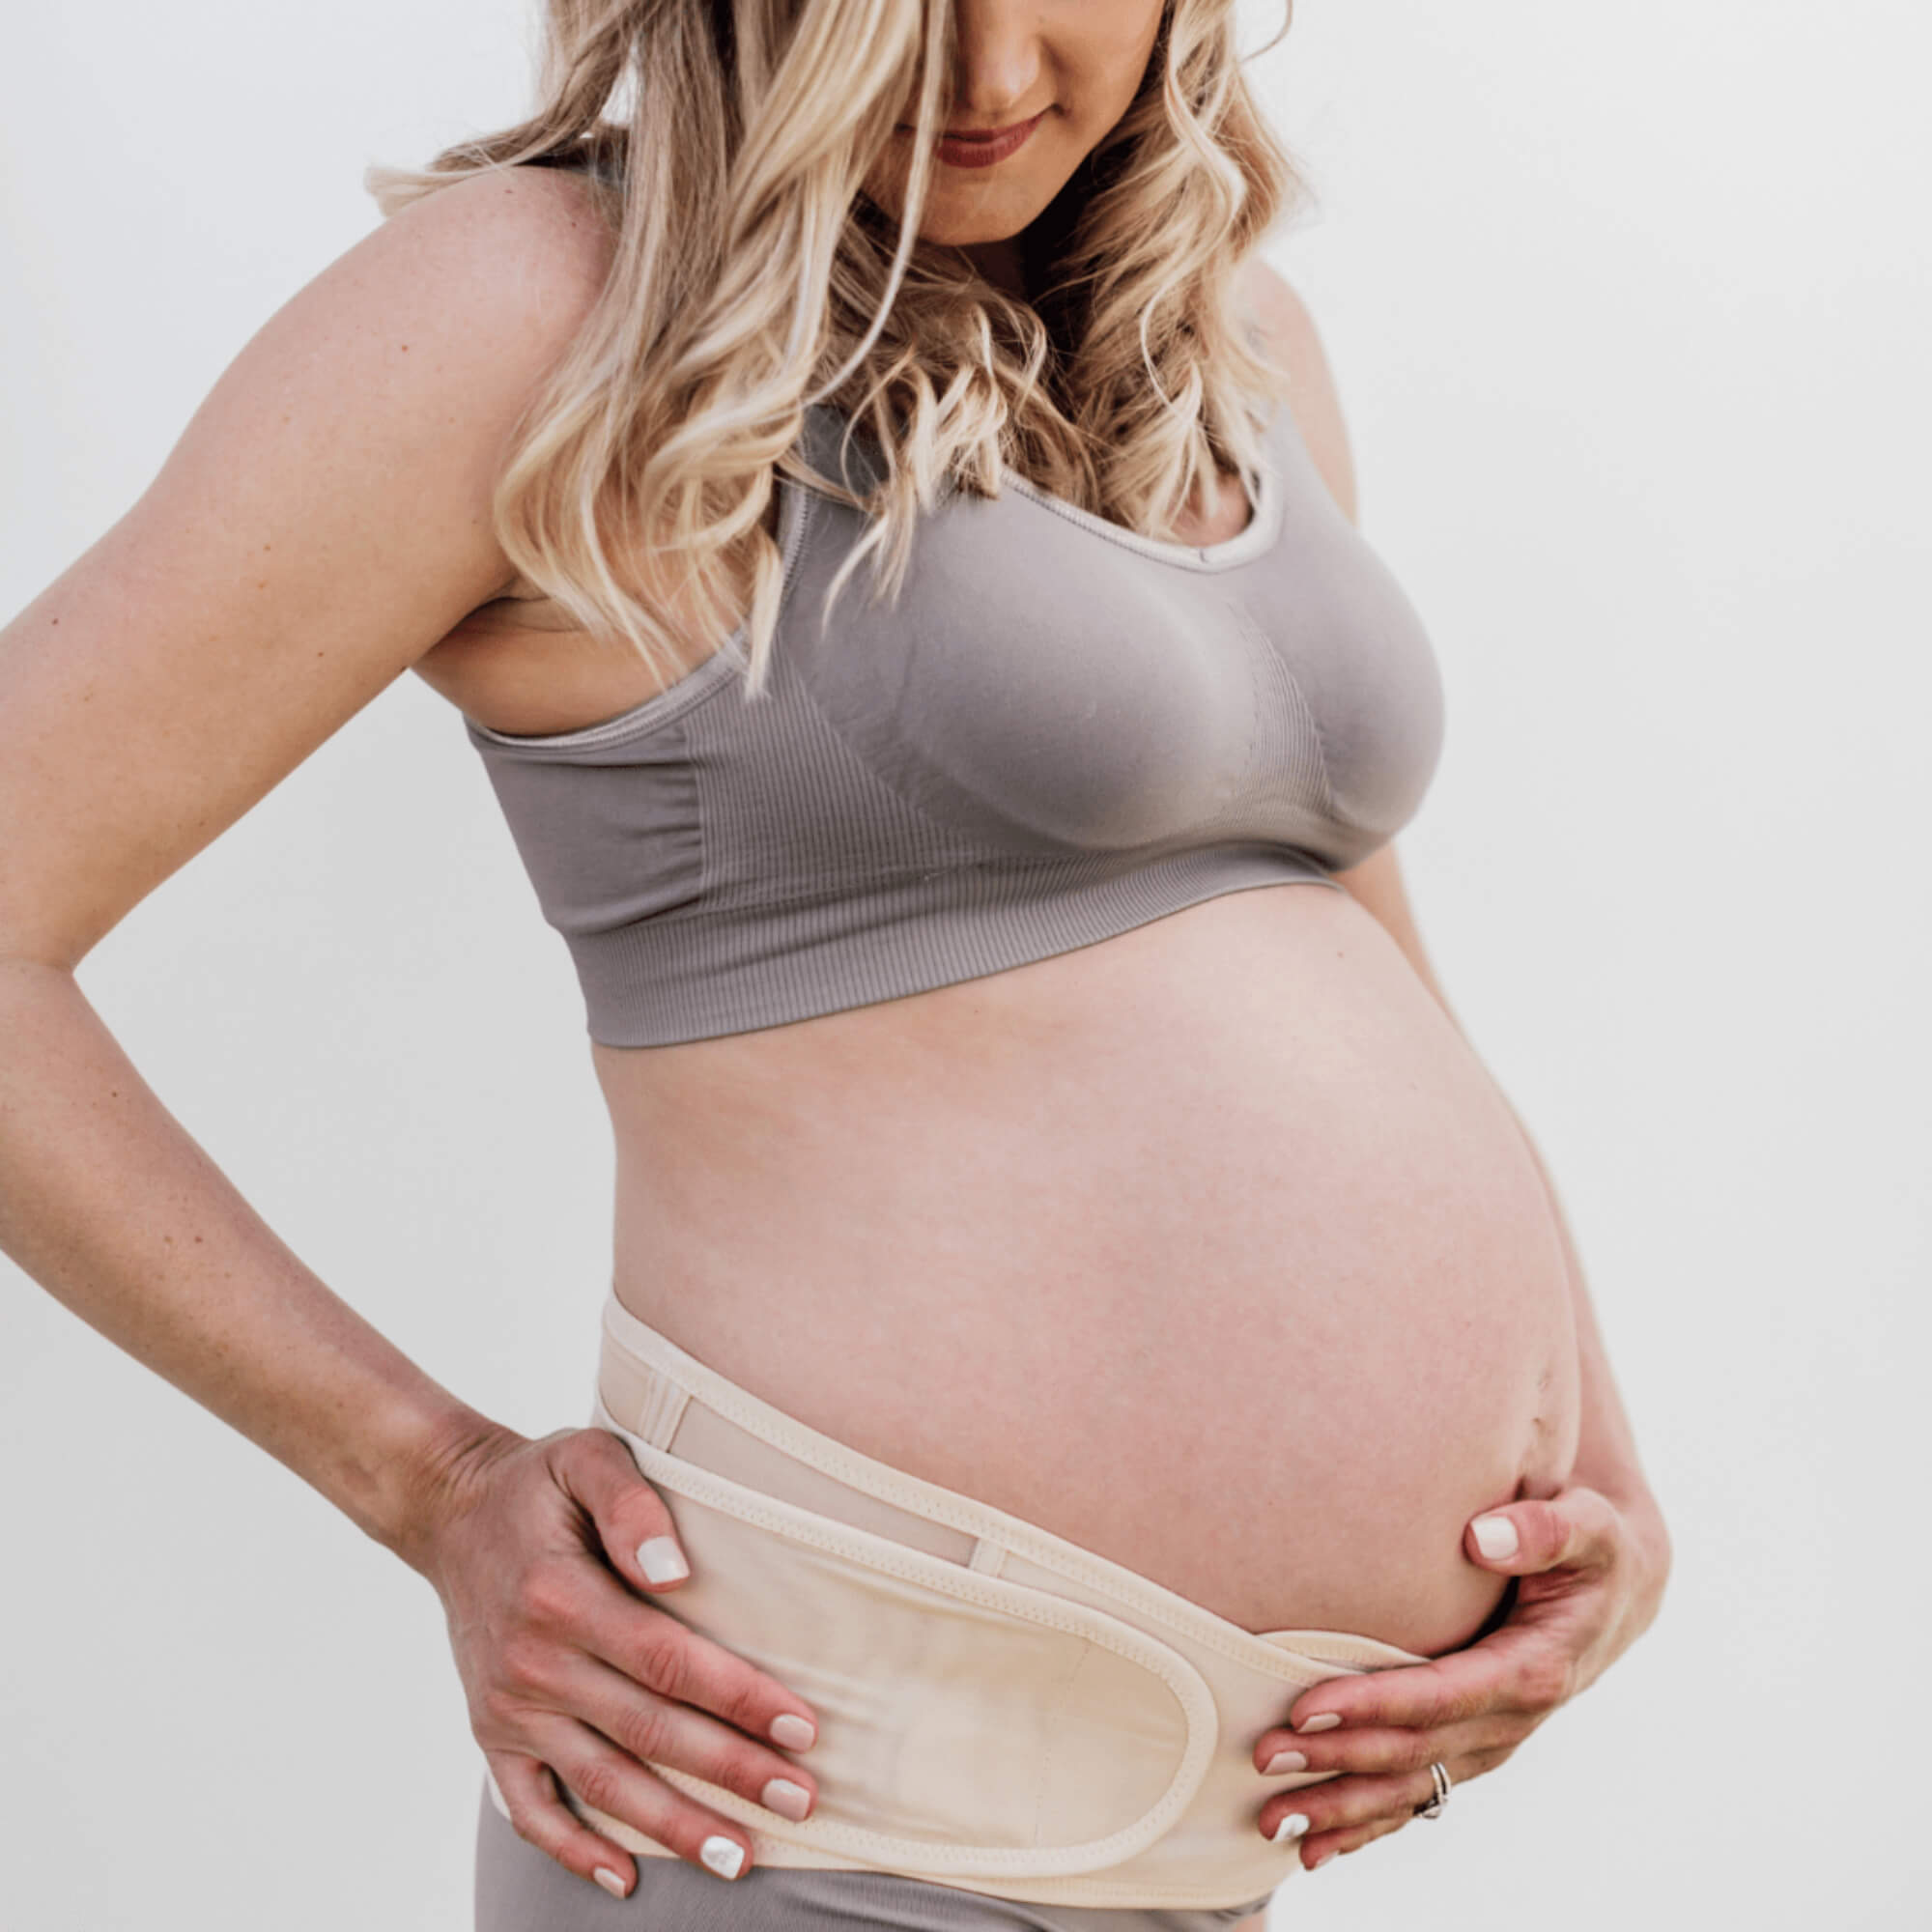 noola belly support during pregnancy black maternity belts support bands